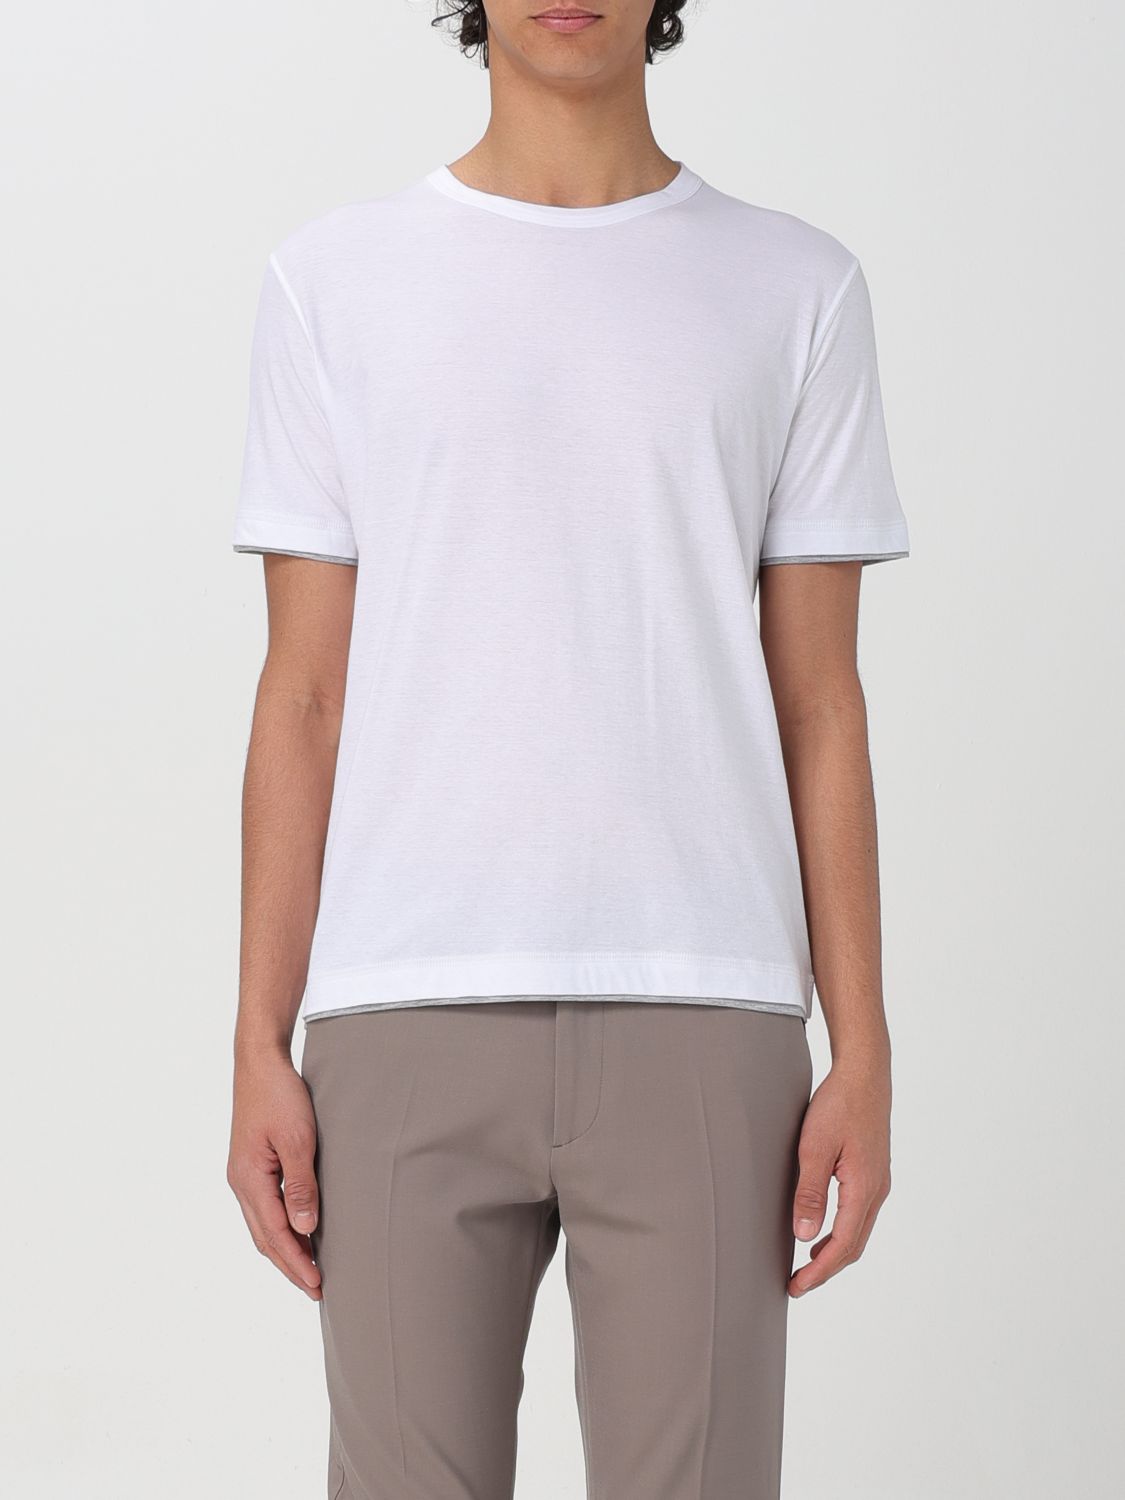 Paolo Pecora T-shirt  Men Color White